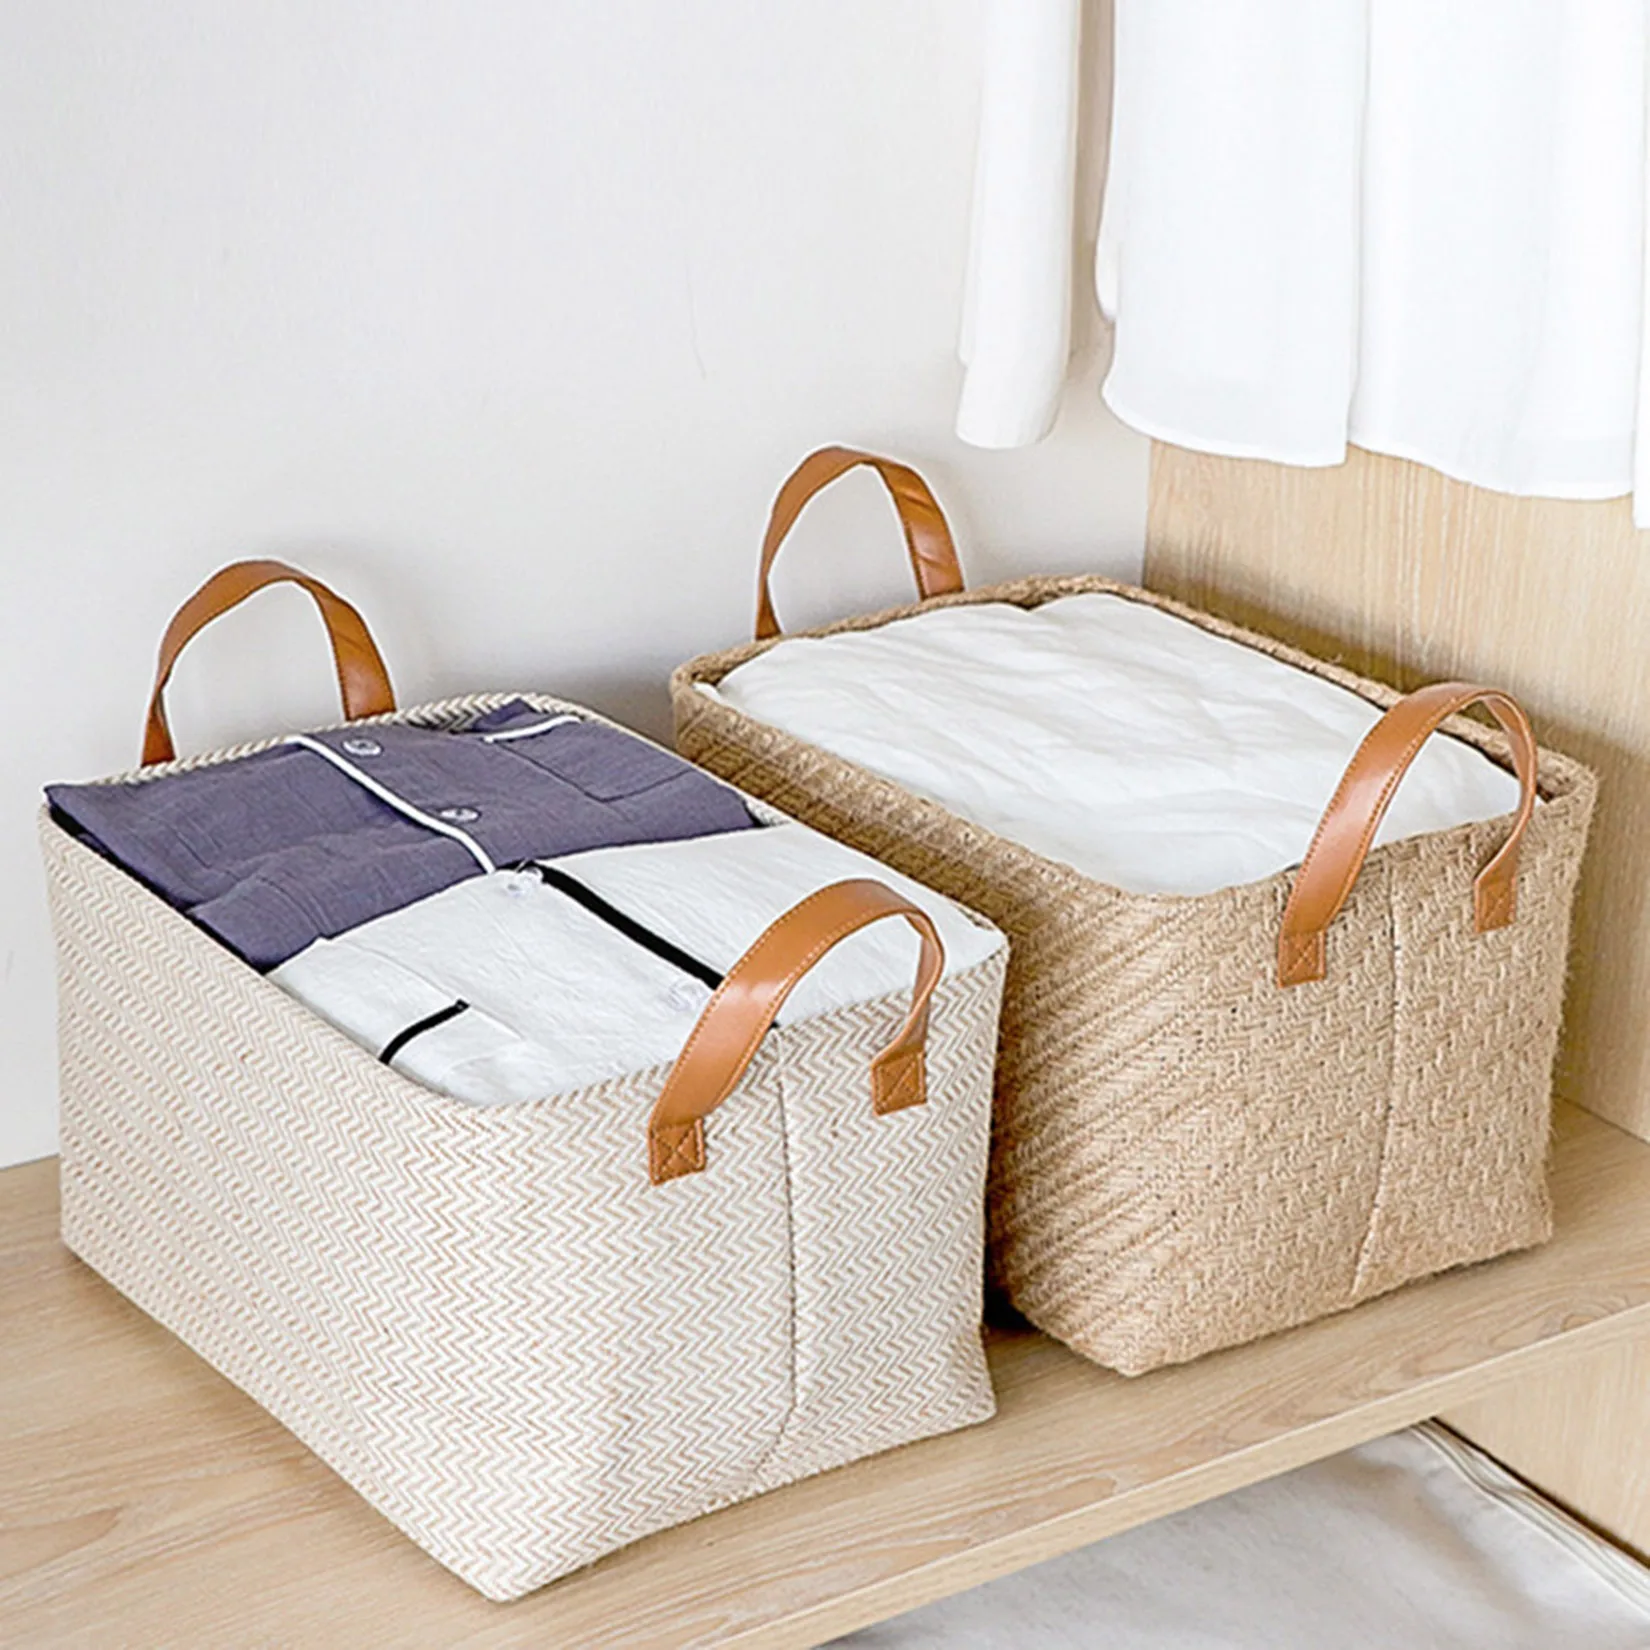 

Foldable Organizer Storage Box Basket Eco-friendly Woven Laundry Toys Home Baskets Storage Sundries Box Handles 2pcs Organizer